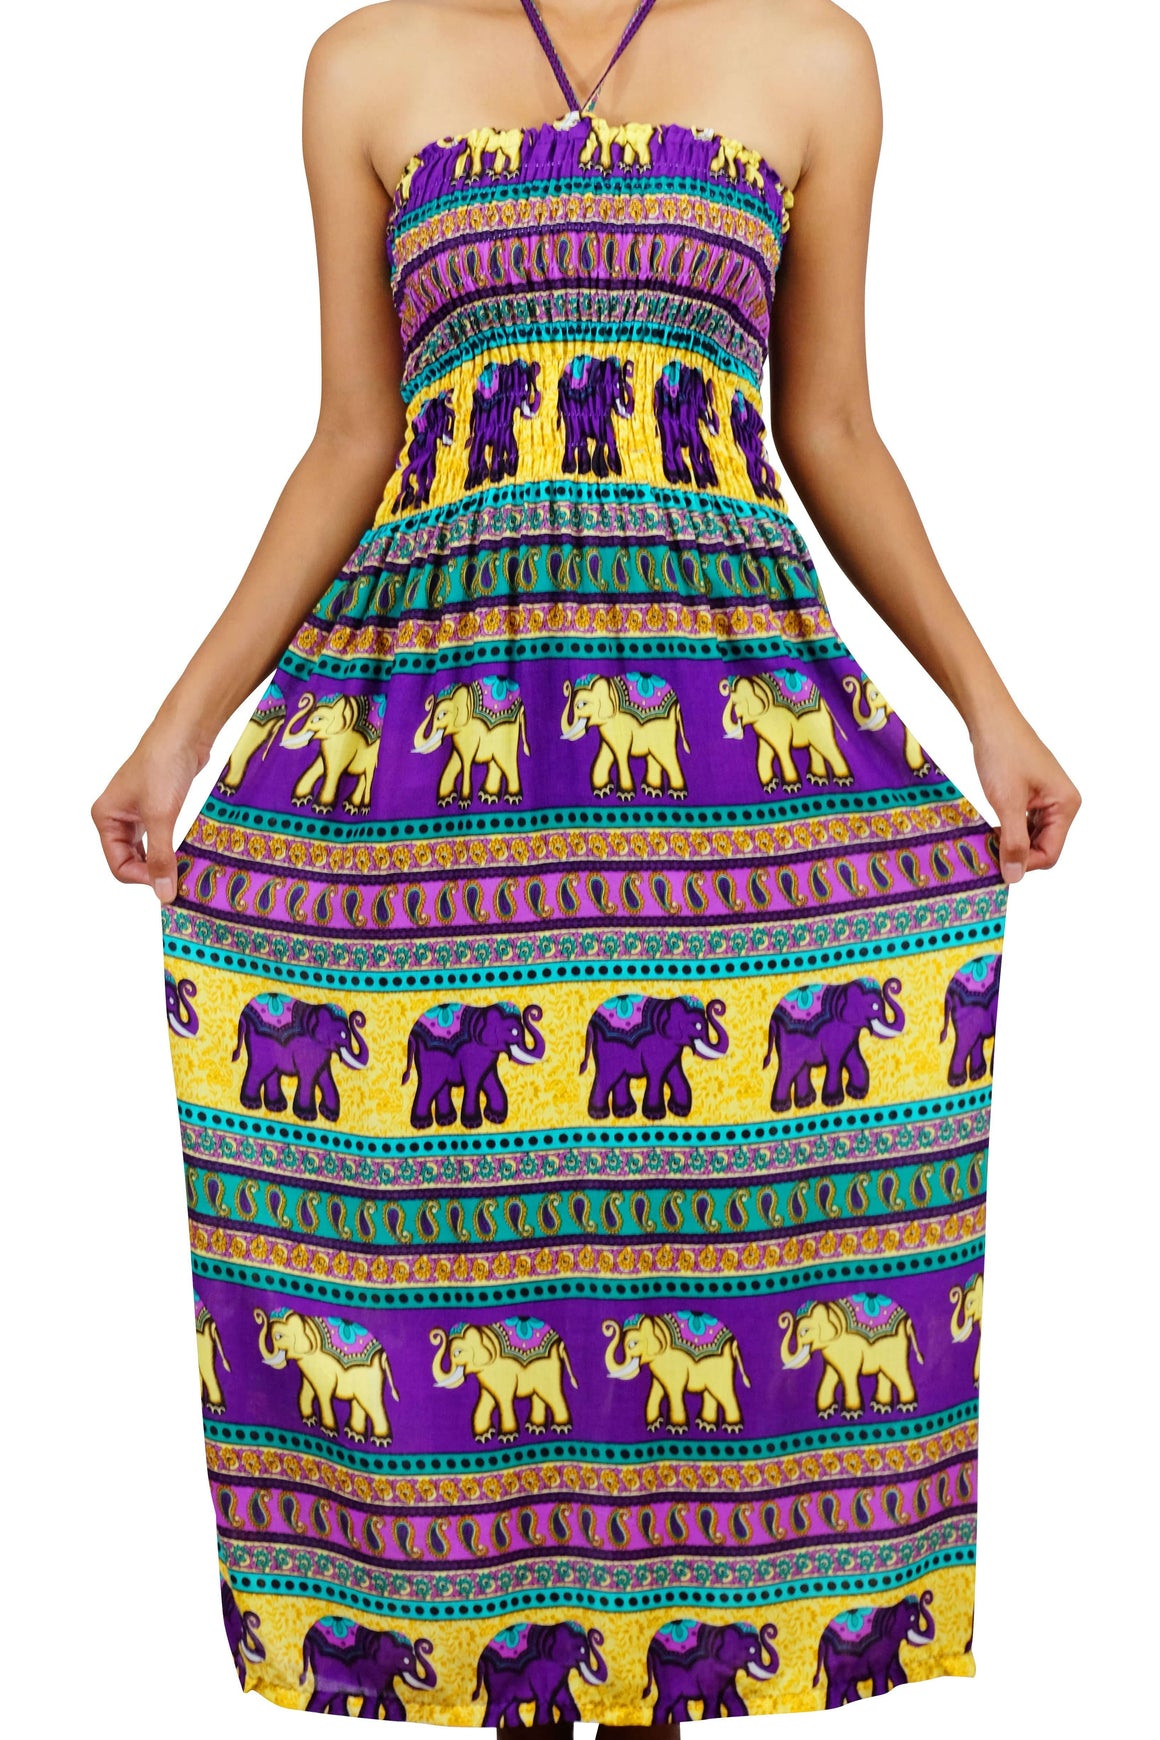 Elephant Shirt Store Dress Chang Colorful Halter Elephant Dress Purple